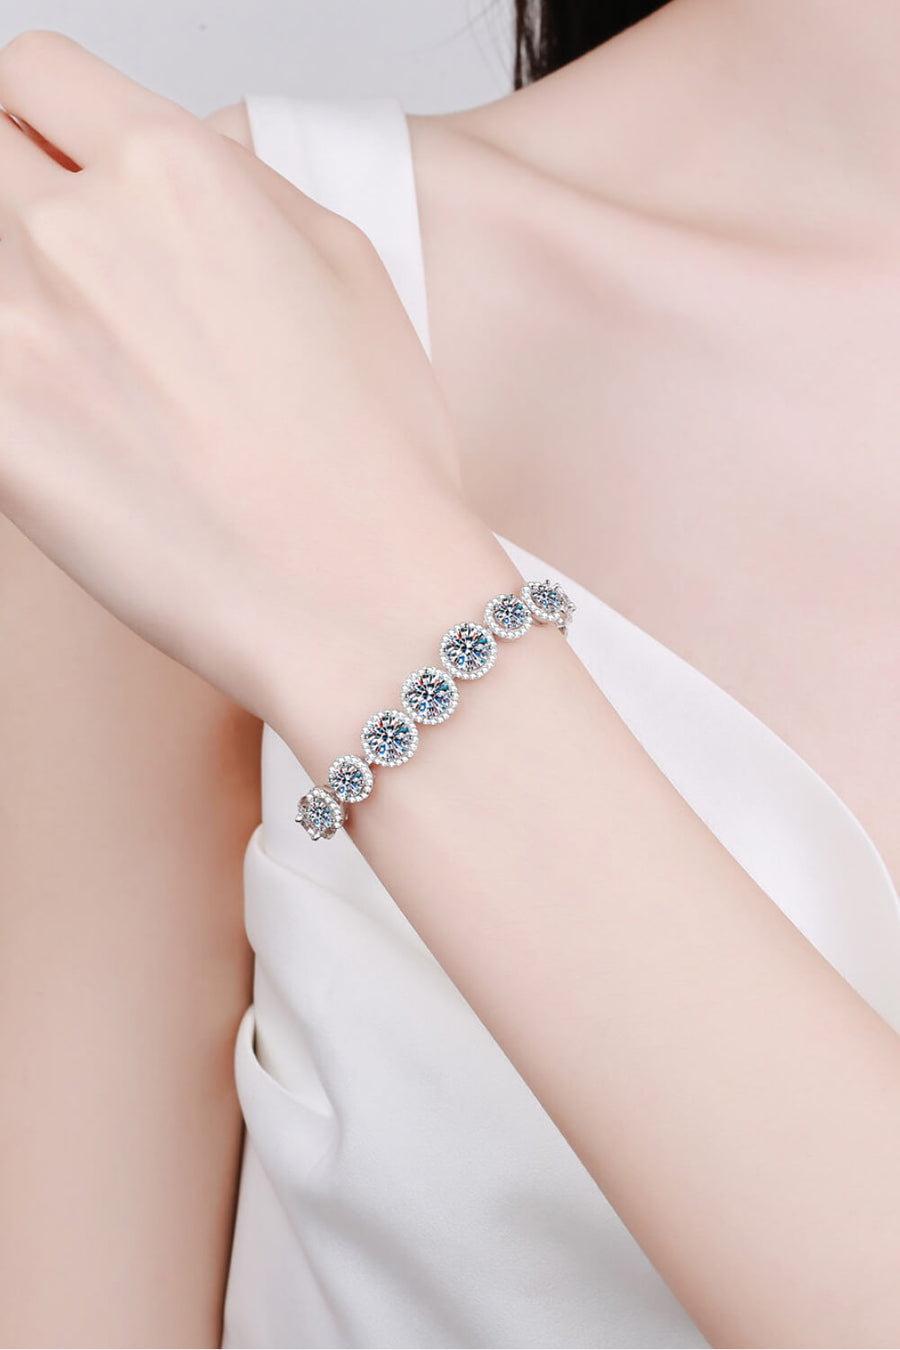 1# BEST Diamond Bracelet Jewelry Gifts for Women | #1 Best Most Top Trendy Trending 10.4 Carat Diamond Bracelet Gift for Women, Mother, Ladies | MASON New York